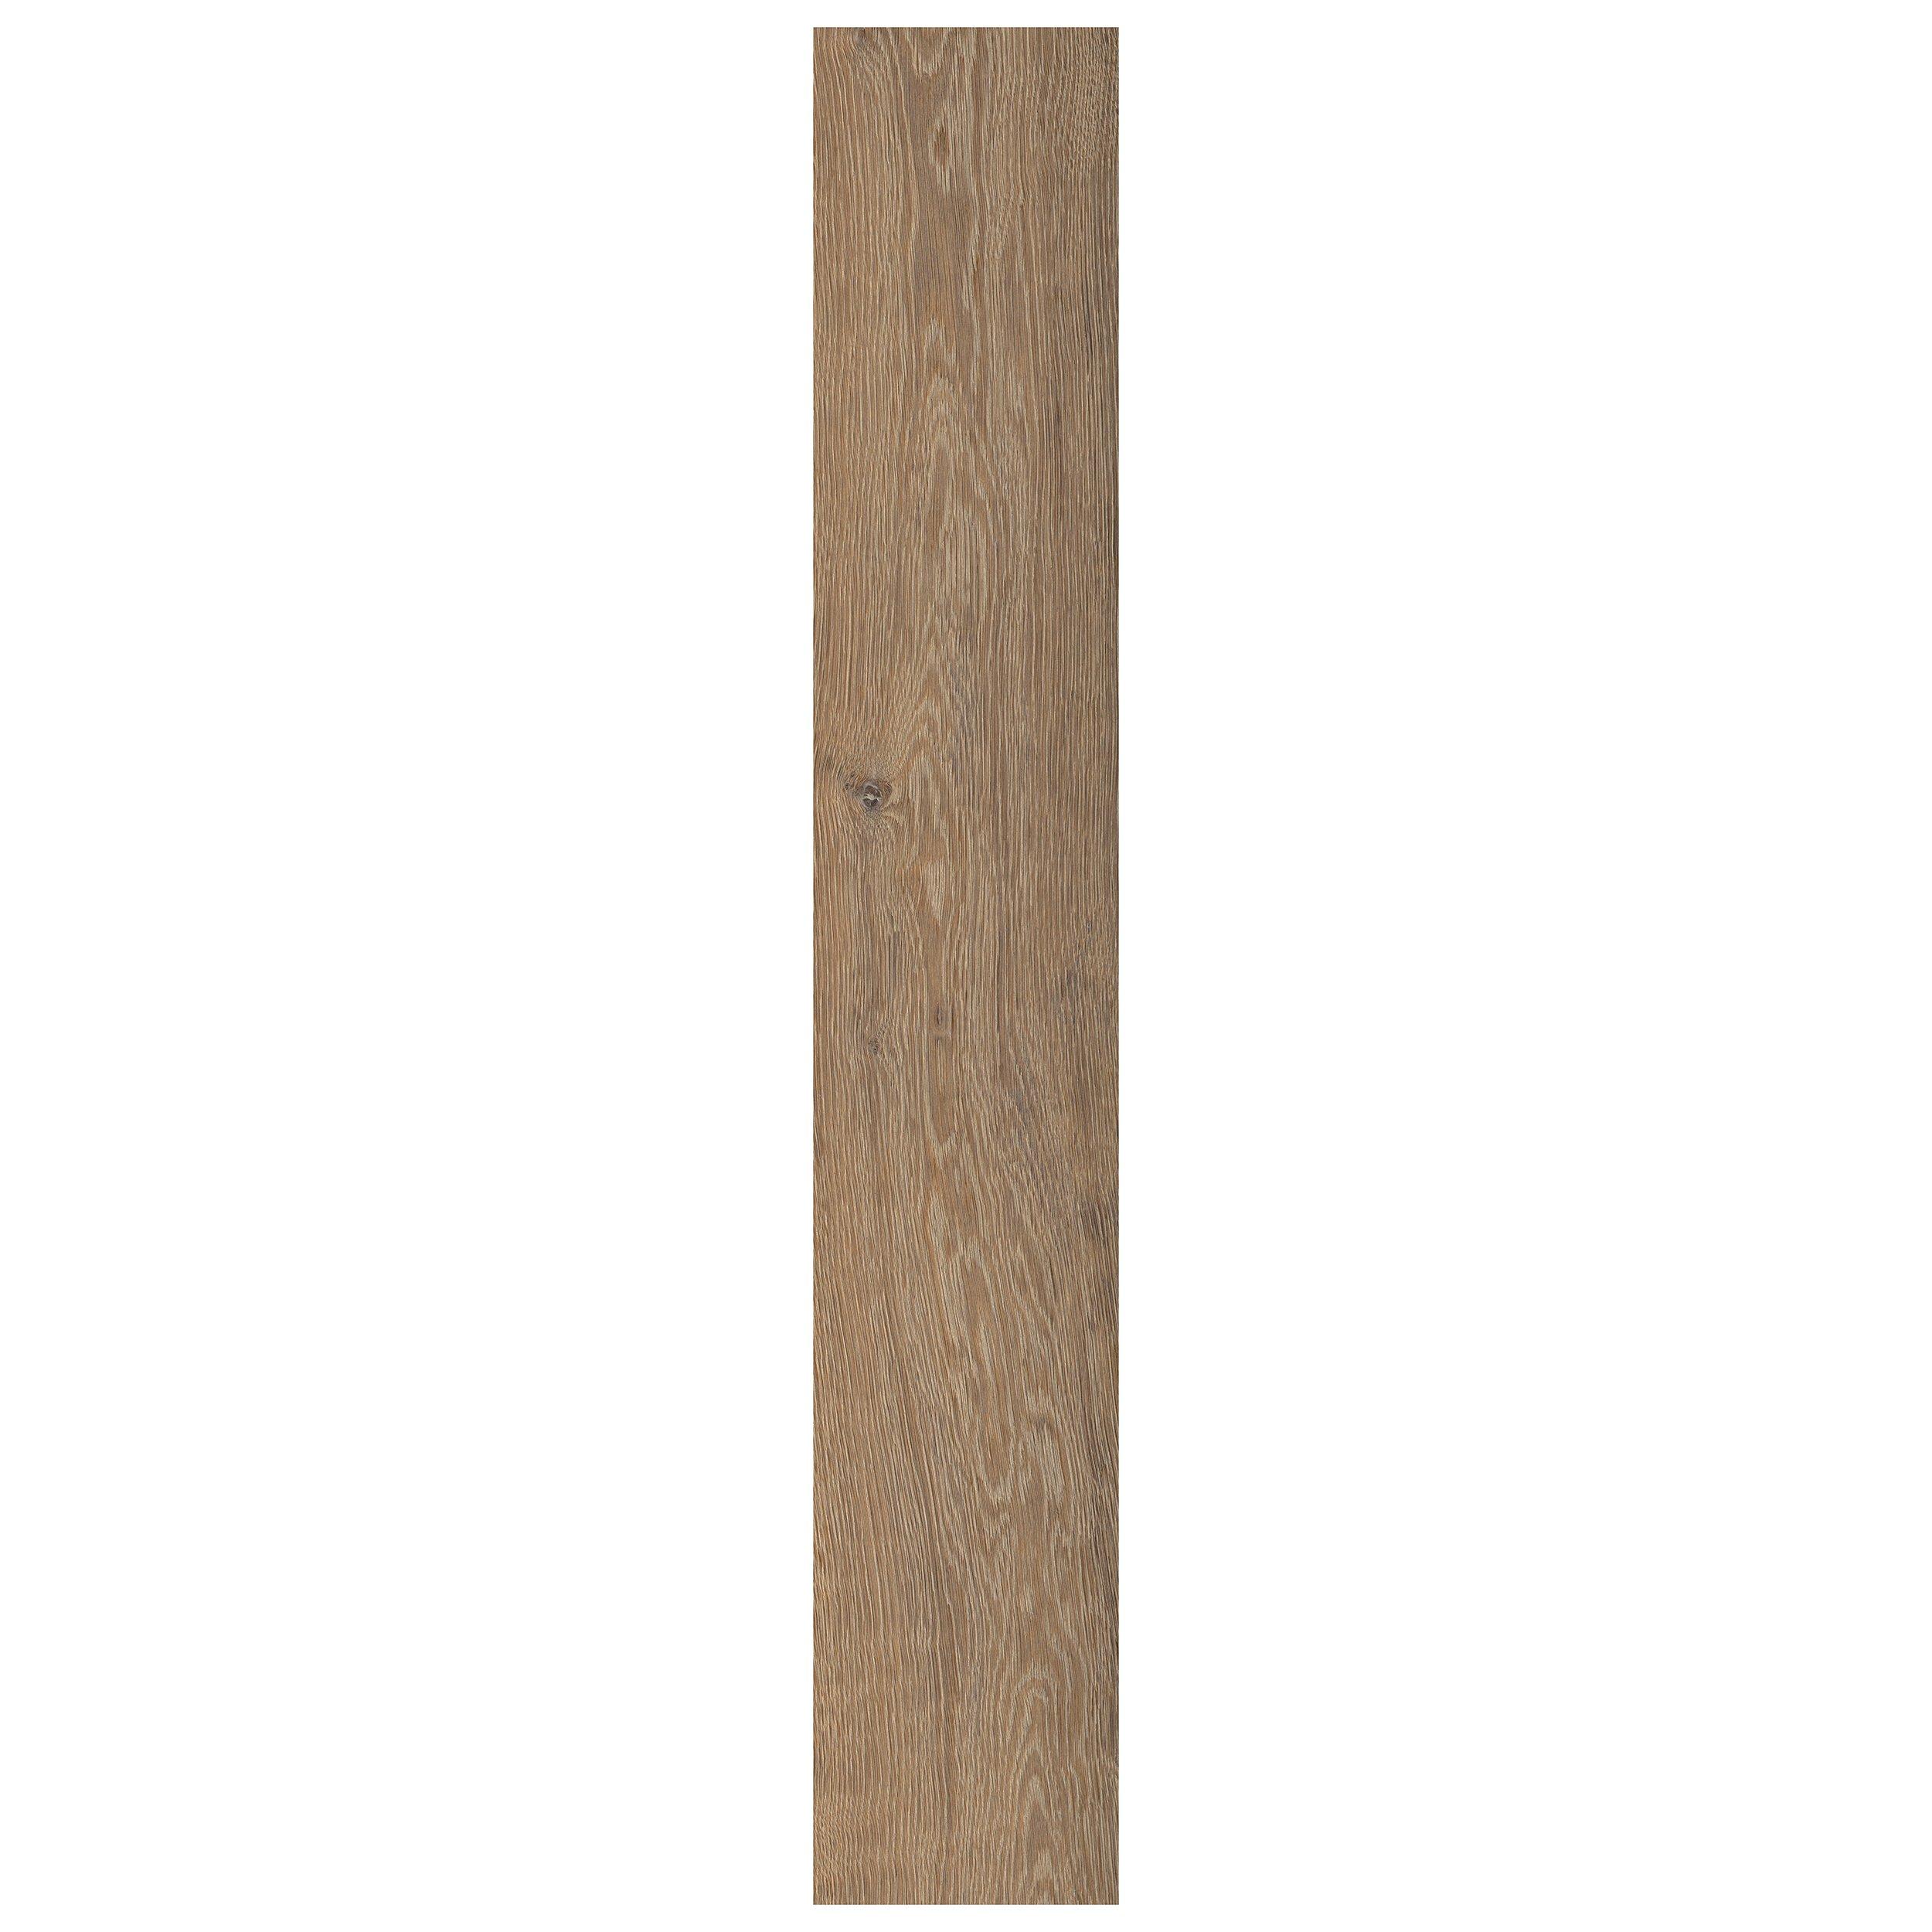 Espresso Oak Rigid Core Luxury Vinyl Plank - Cork Back